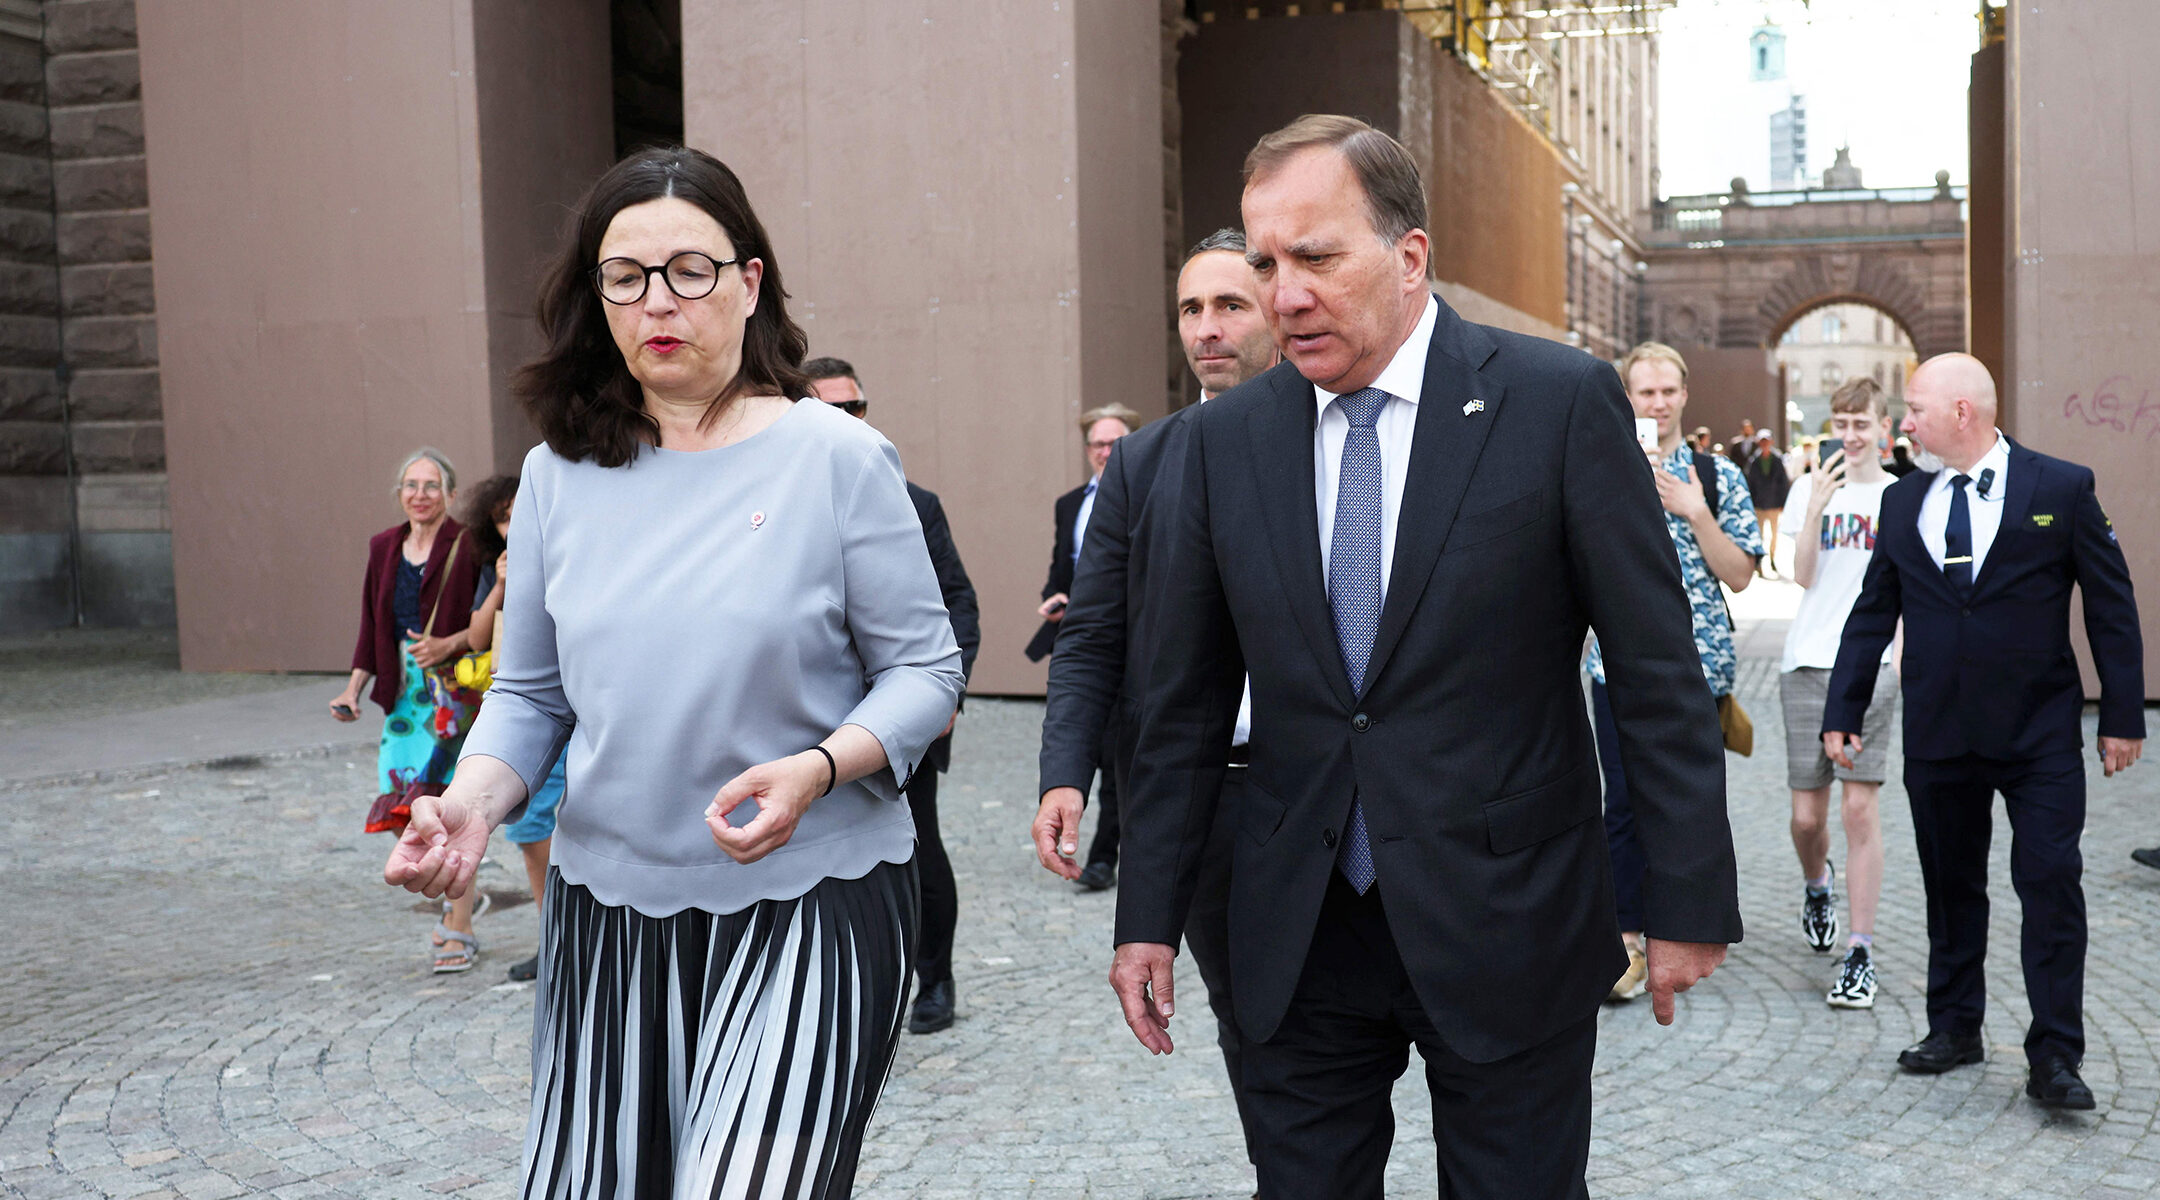 Sweden's Prime Minister Stefan Lofven and the Minister of Education Anna Ekström leave the Swedish Parliament in Stockholm on June 21, 2021. (Nils Petter Nilsson/TT News Agency/AFP via Getty Images)